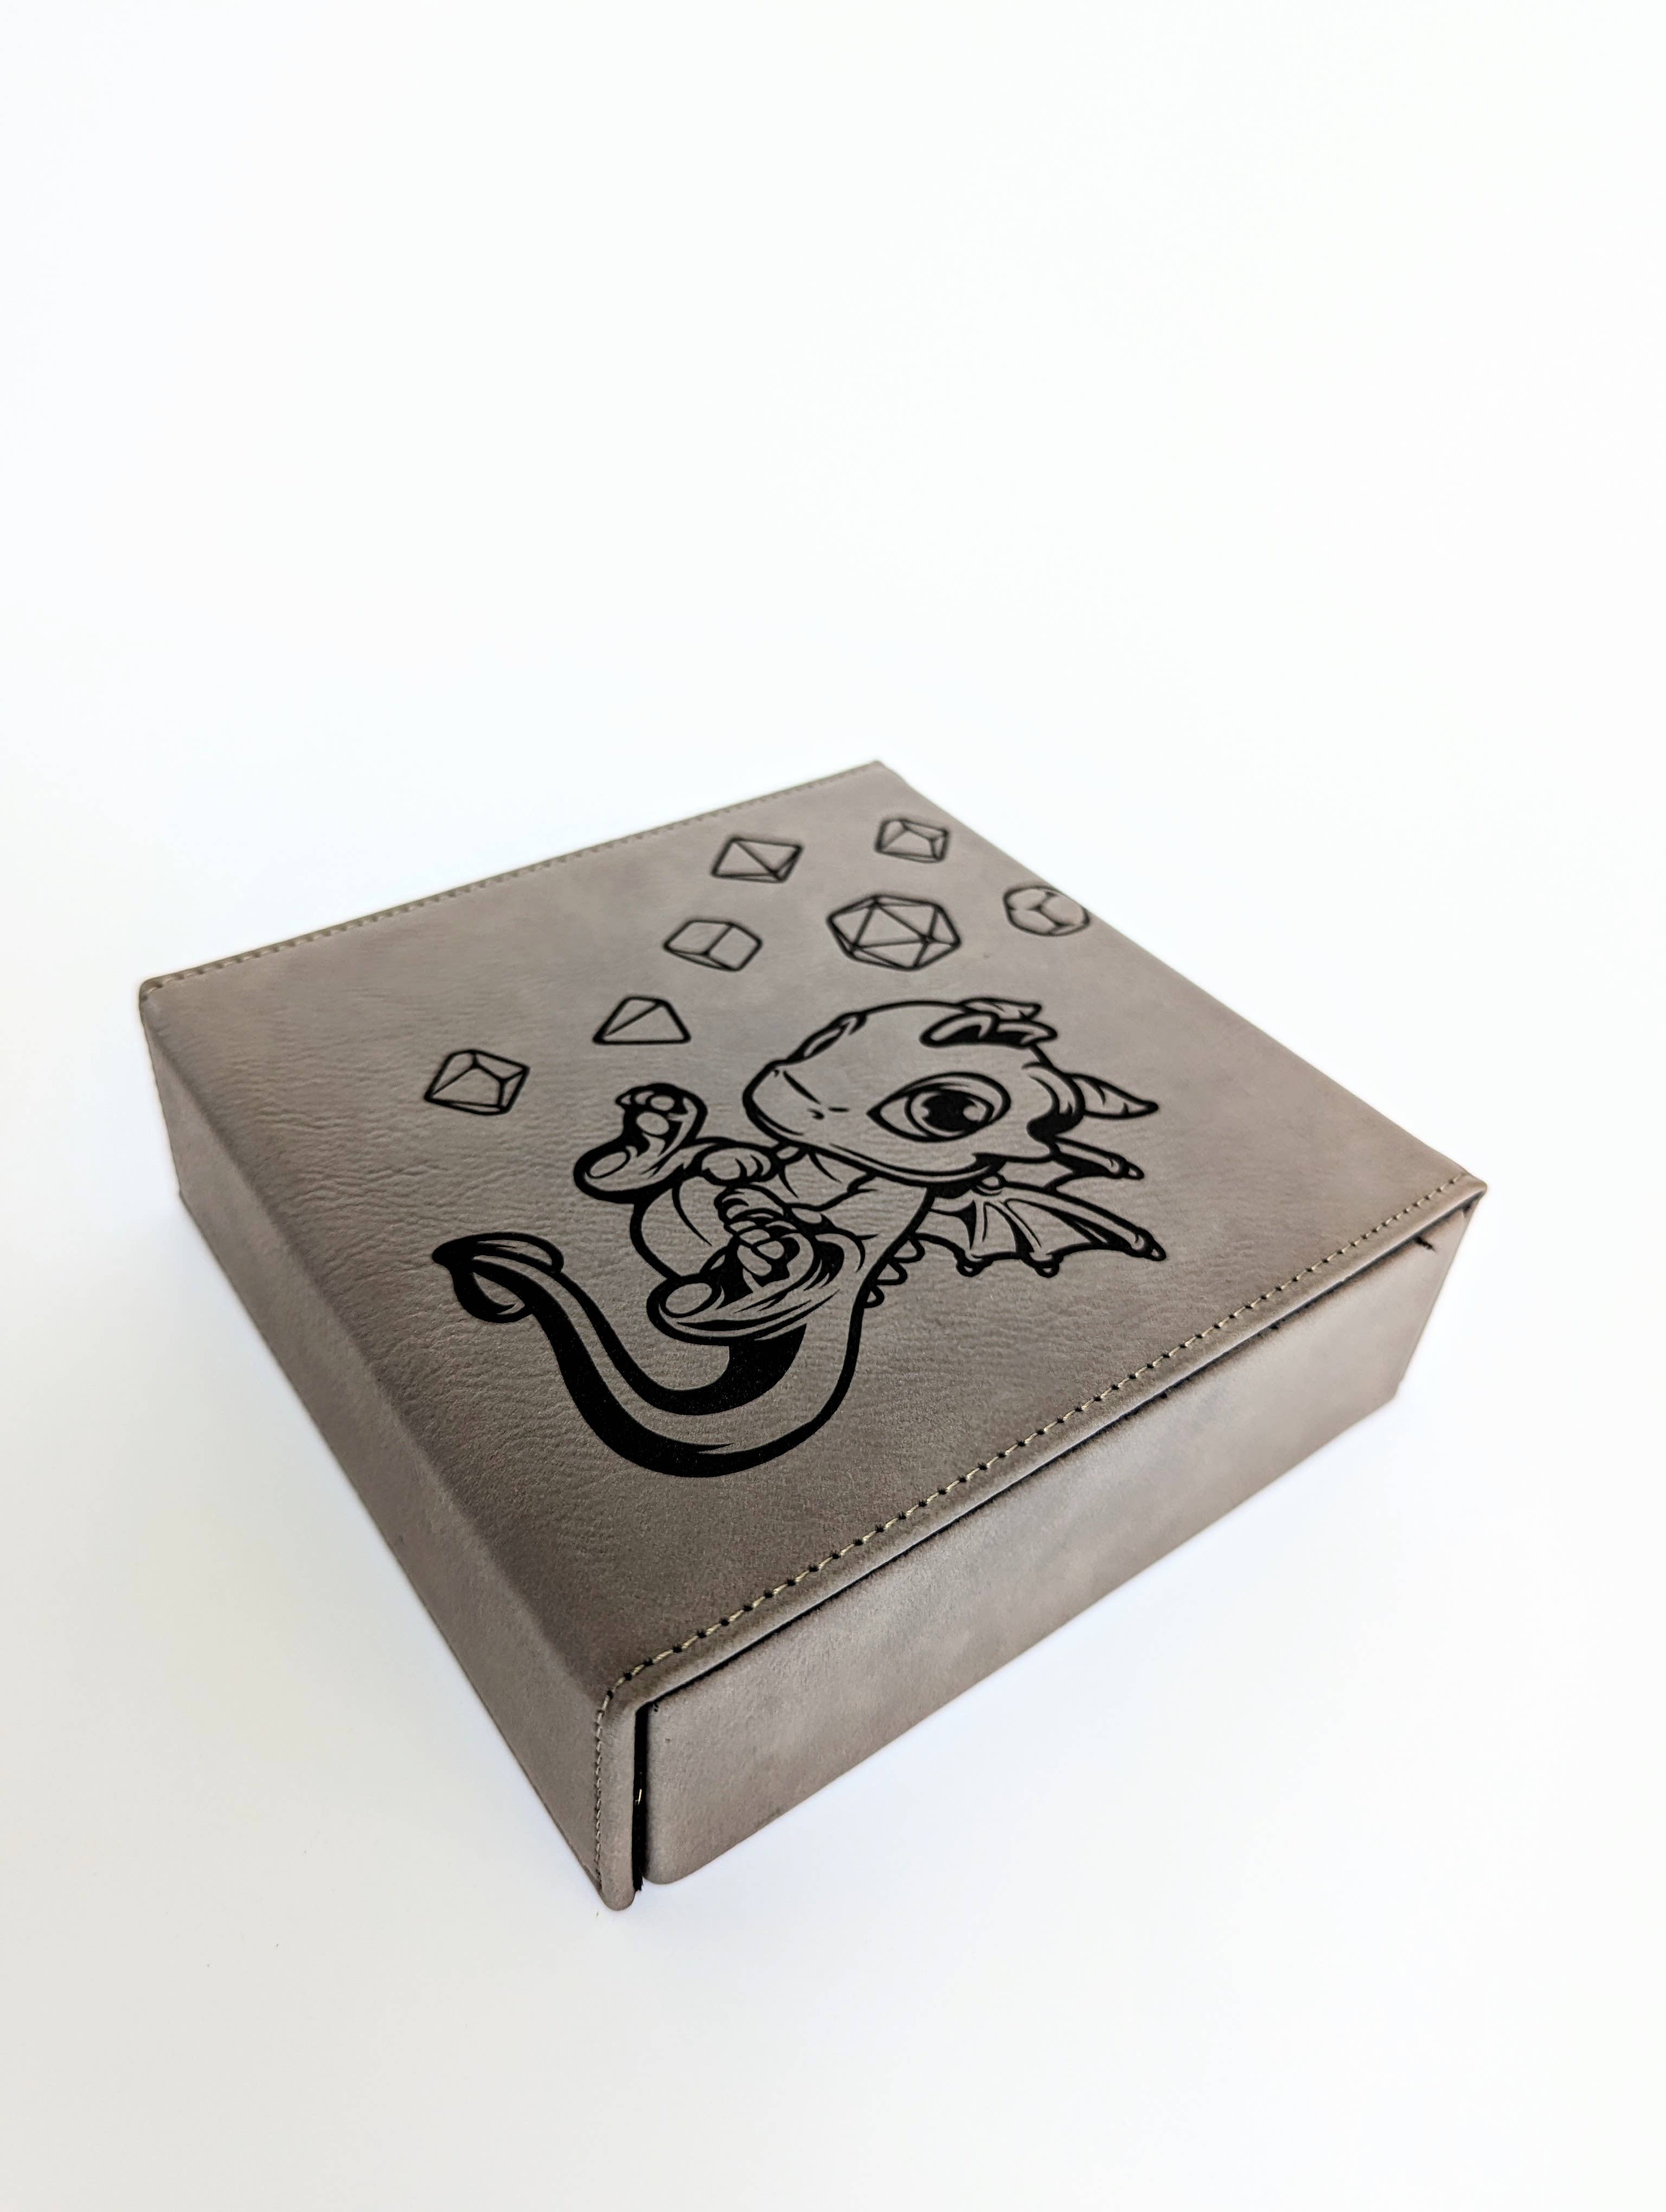 Adoragon - Vegan Leather Dice Box: Chestnut - Bards & Cards